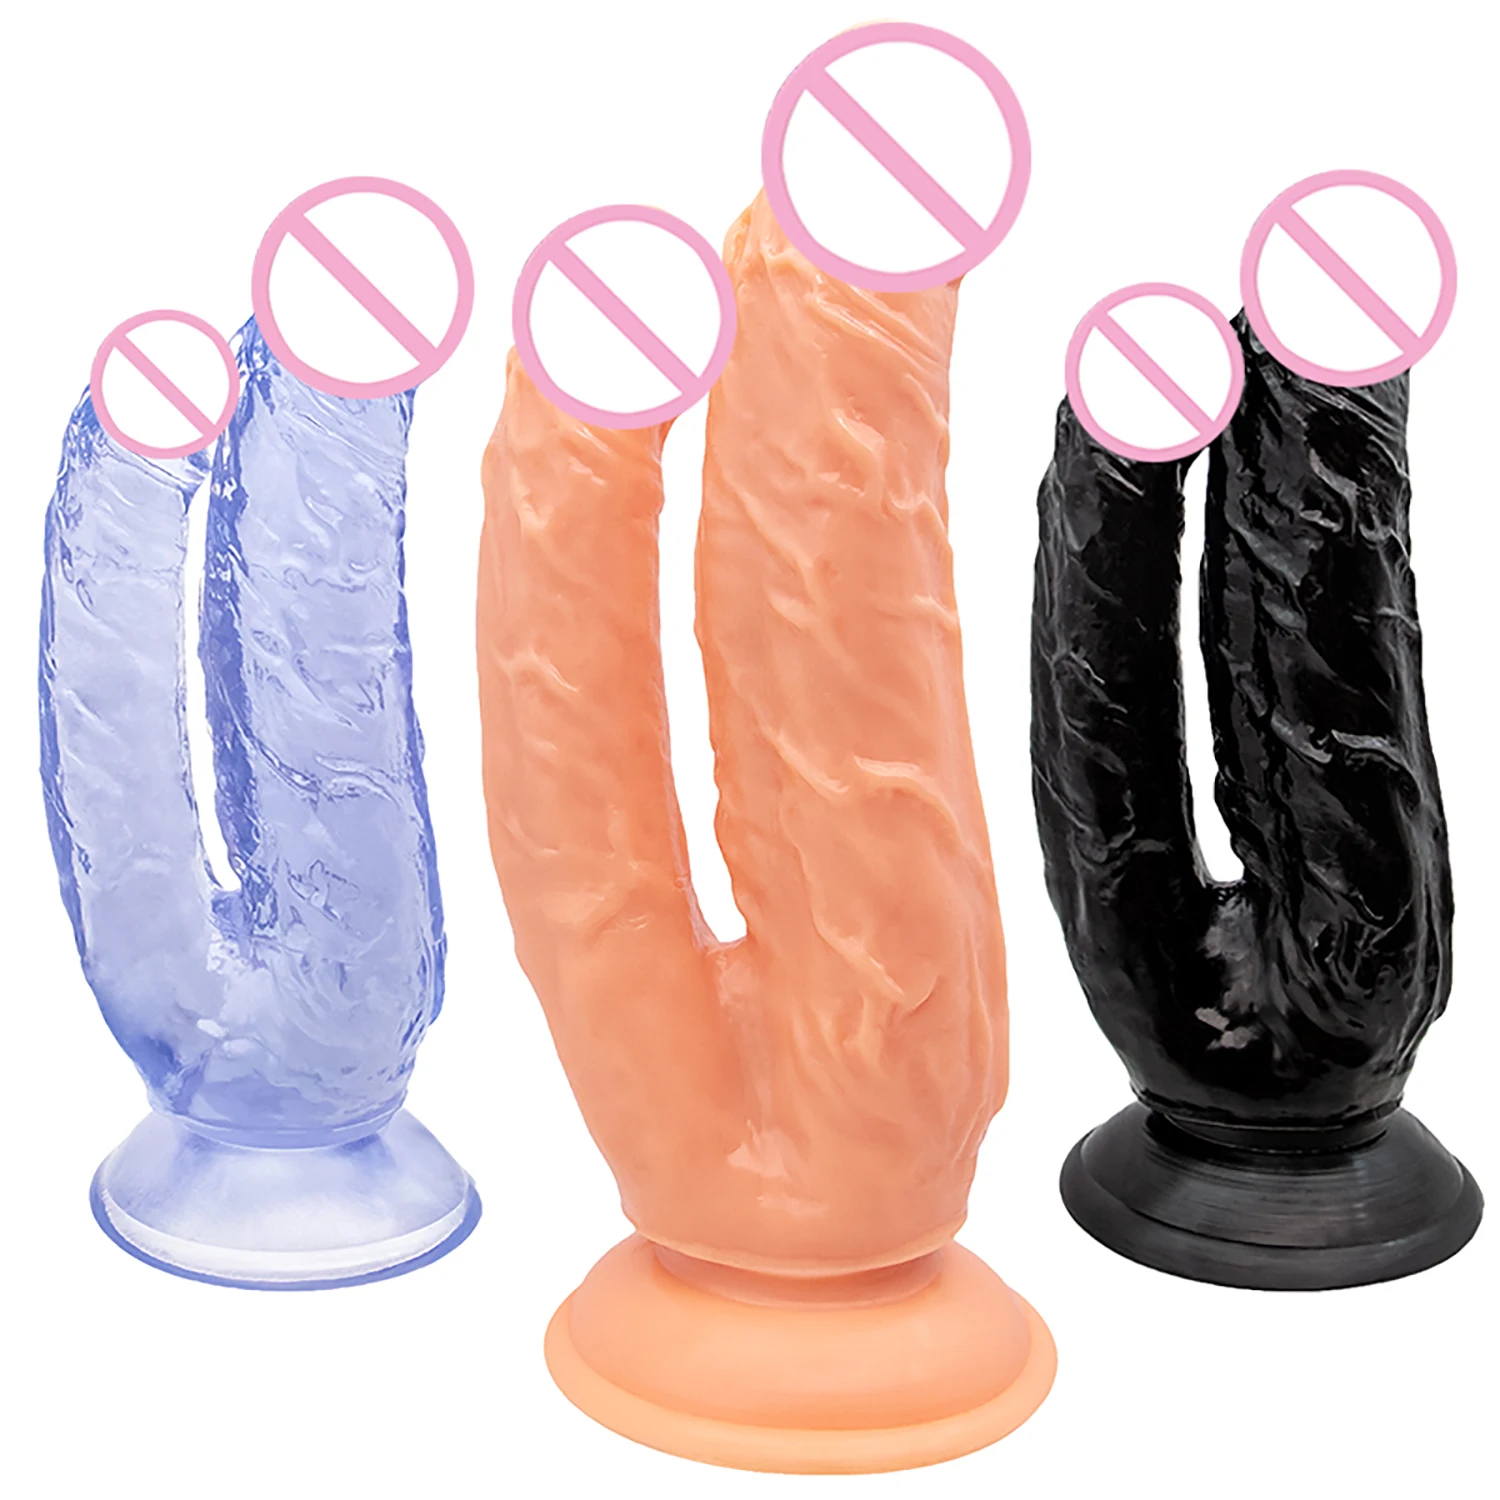 

Huge Double Dildos Double Penetration Realistic Dick Vagina and Anus Soft Penis Sex Toys Phallus Anal Plug Masturbator for Women